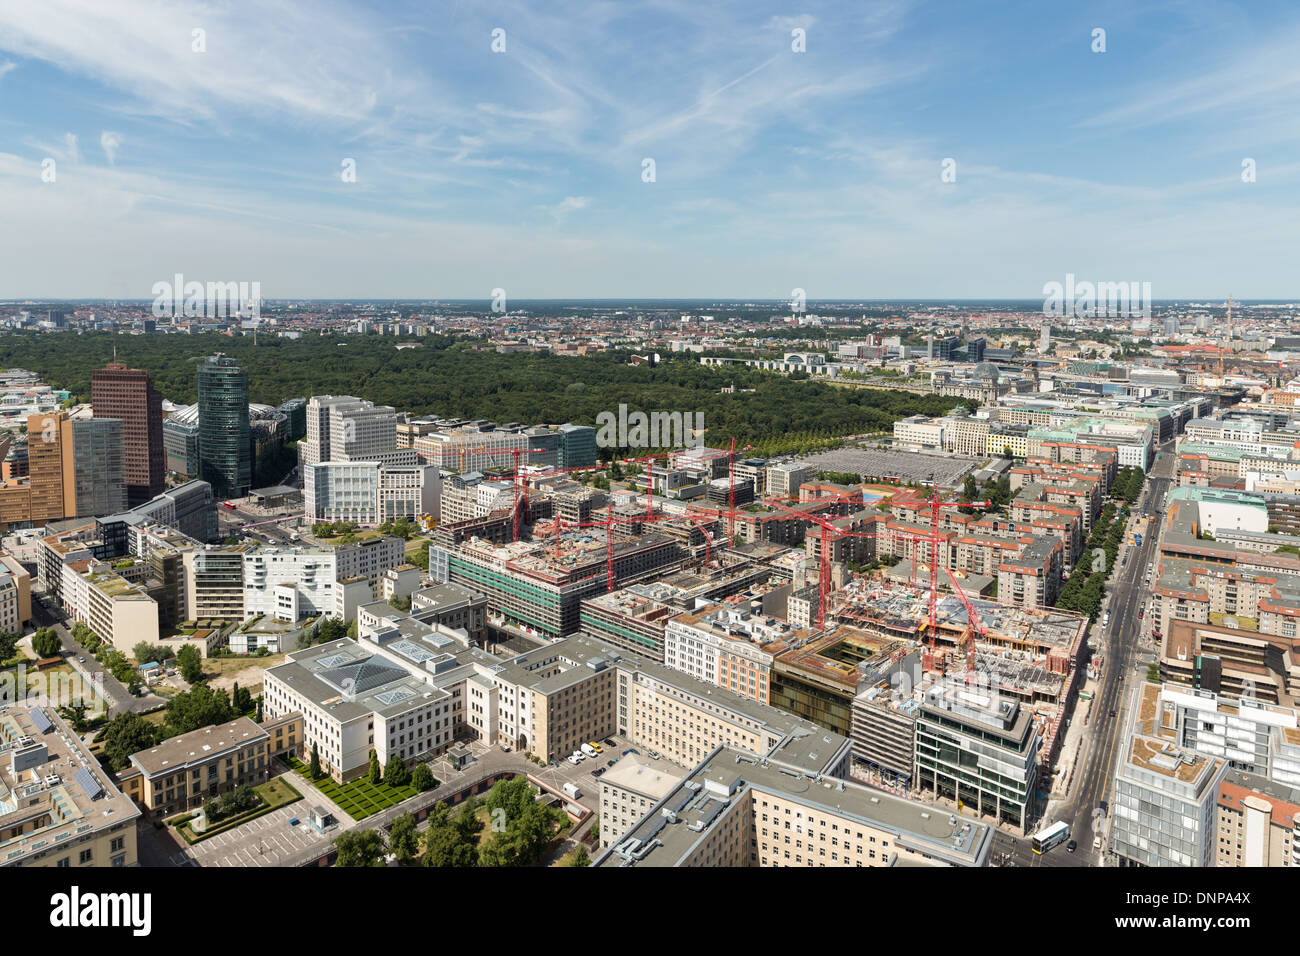 Aerial view of Berlin with Potsdamer Platz and public park Tiergarten Stock Photo